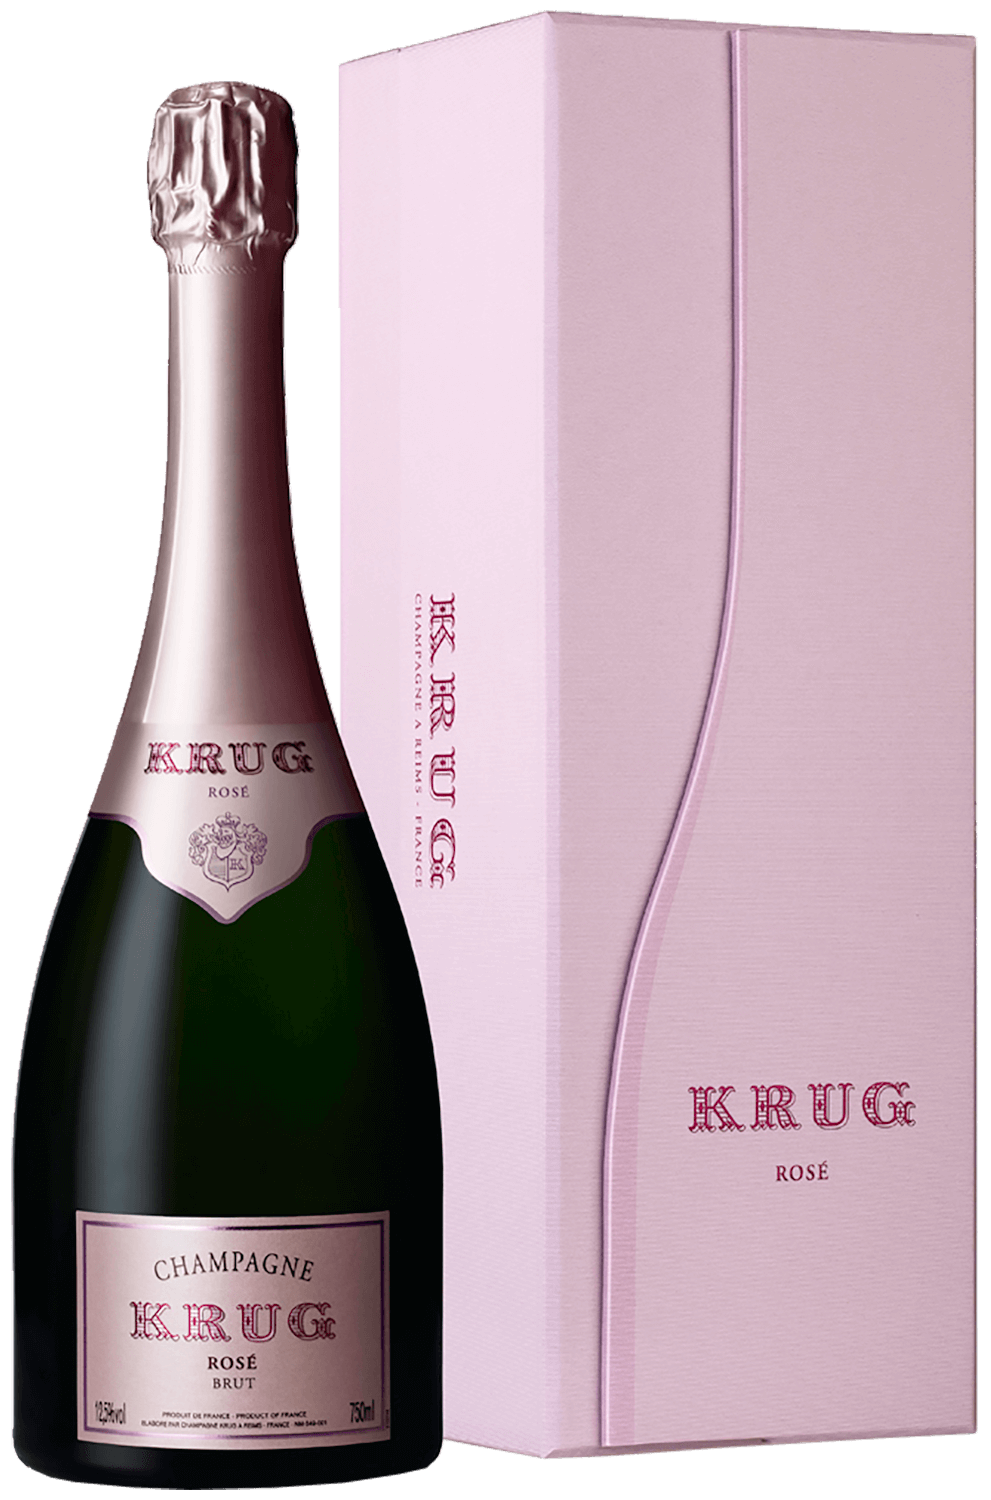 Krug Rose Brut Champagne AOC (in gift box) taittinger prestige rose brut champagne aoc gift box